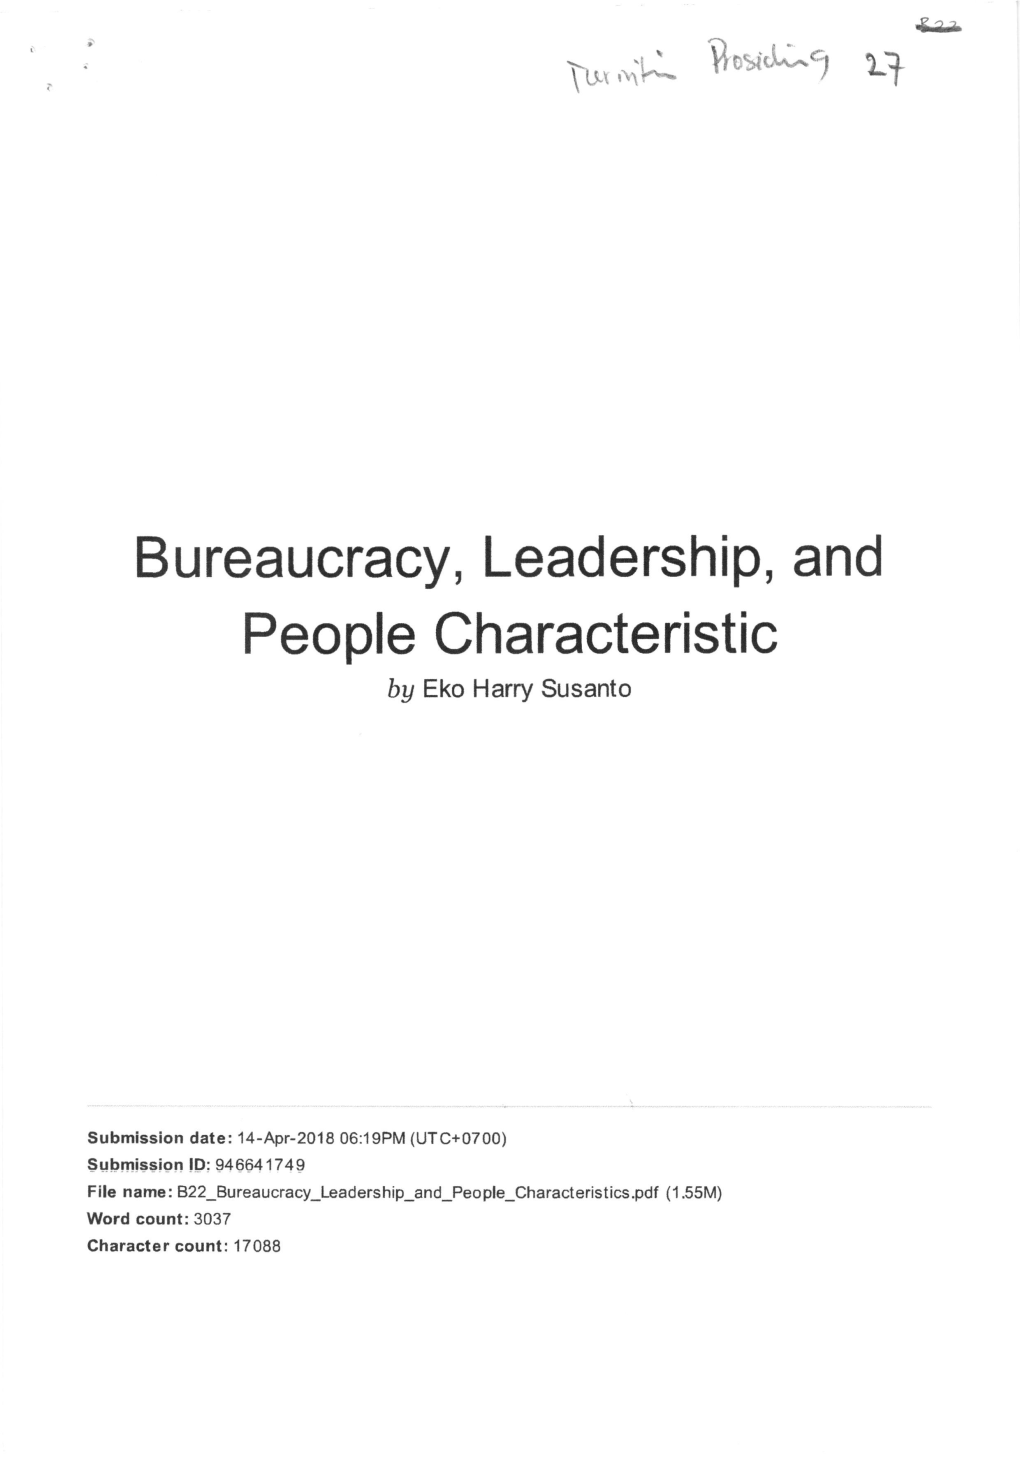 Bureaucracy, Leadership, and People Characteristic by Eko Harry Susanto